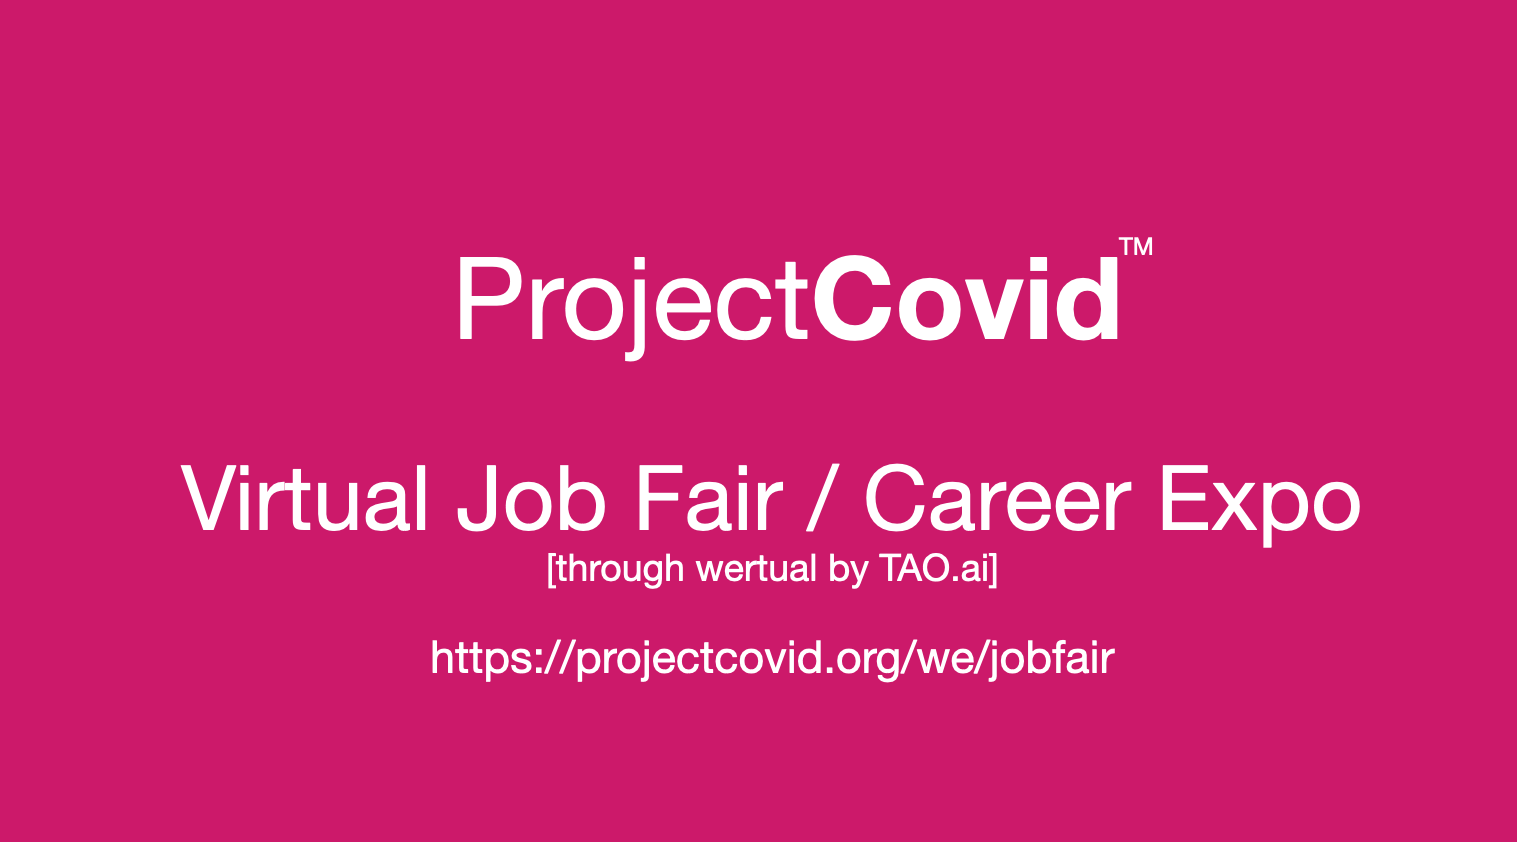 #ProjectCovid Virtual Job Fair / Career Expo Event #Chicago